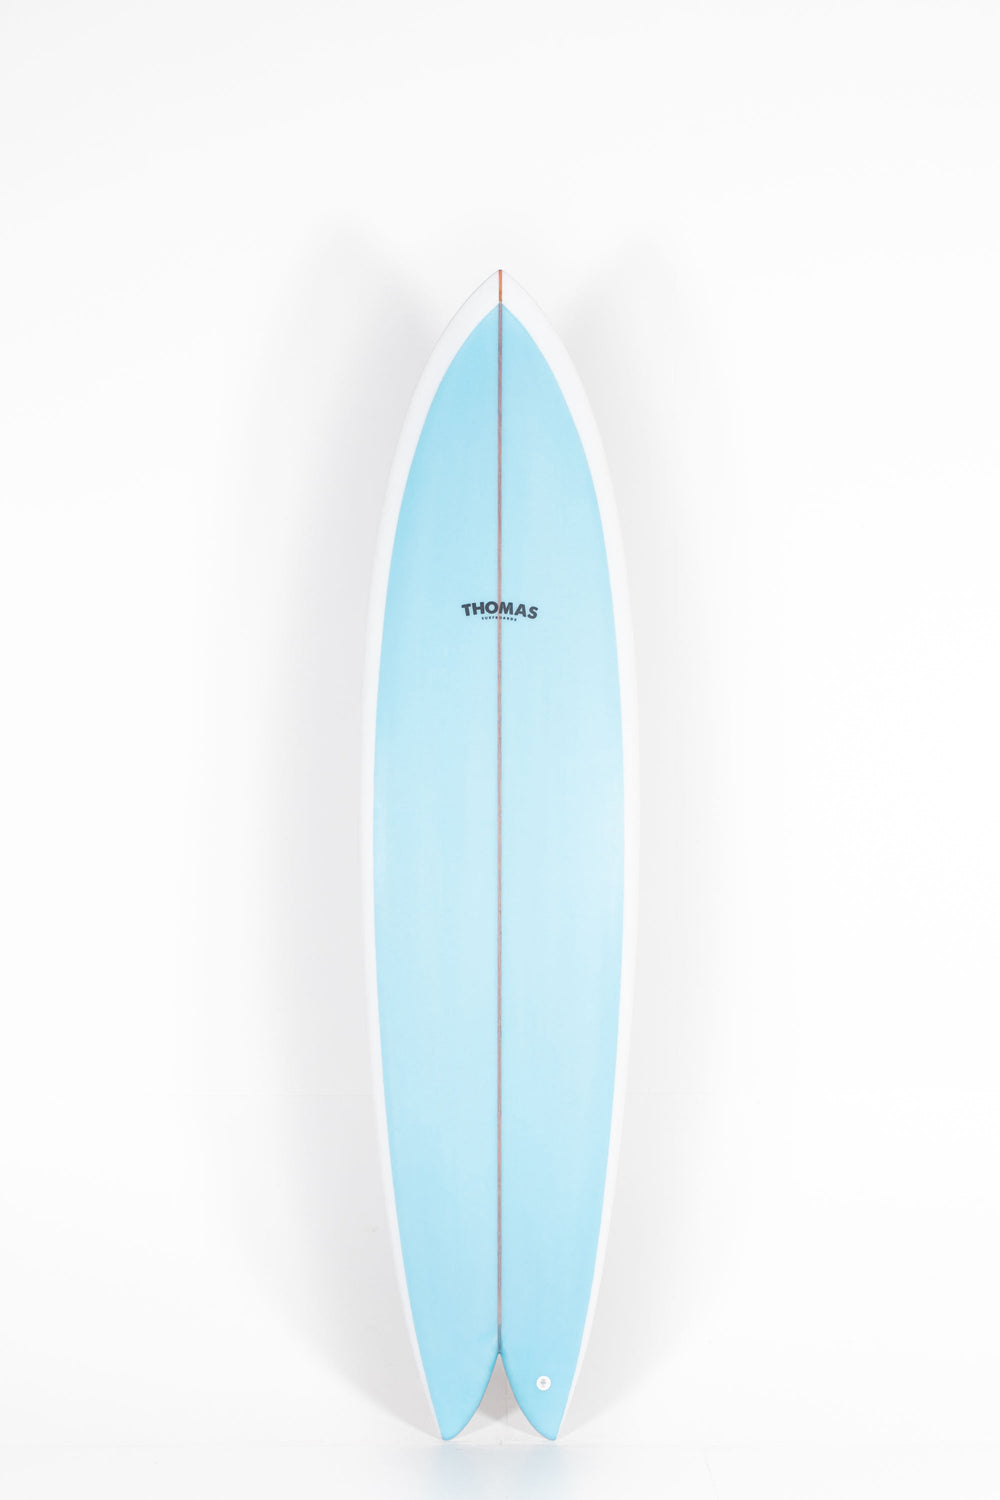 Pukas Surf Shop - Thomas Surfboards - LONG FISH - 7'4